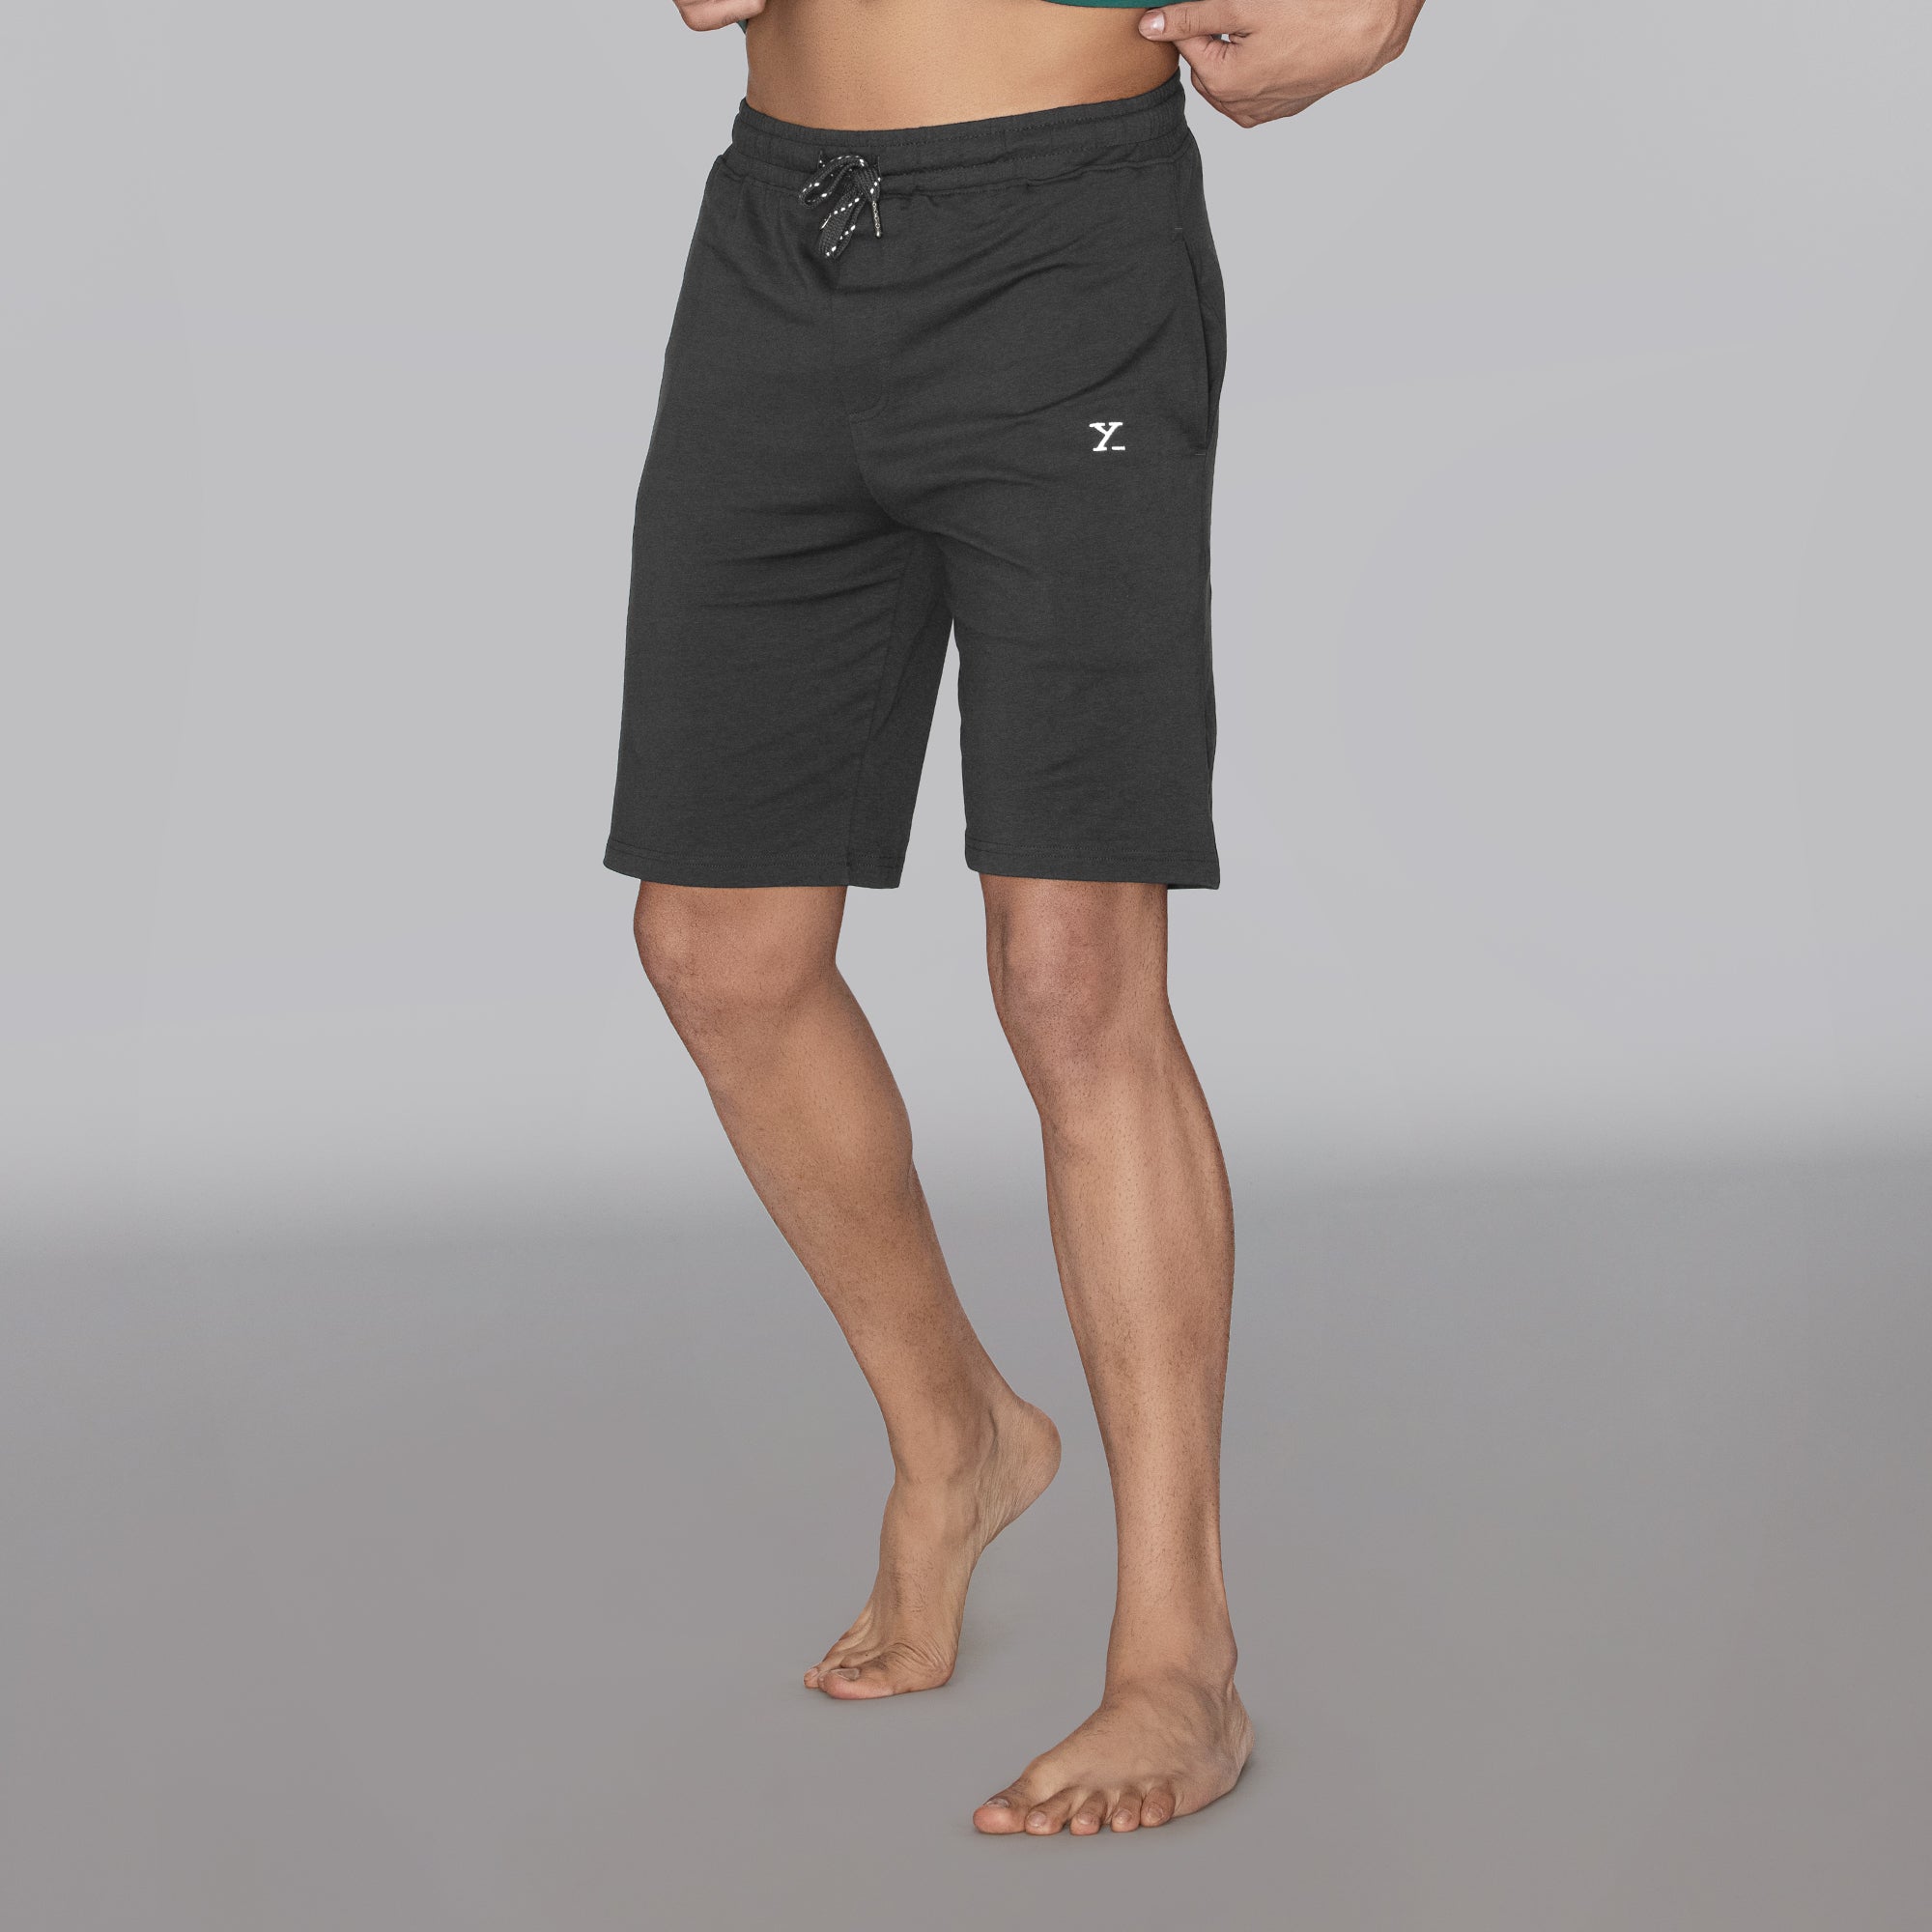 Ace Modal-Cotton Shorts For Men Graphite Grey - XYXX Crew